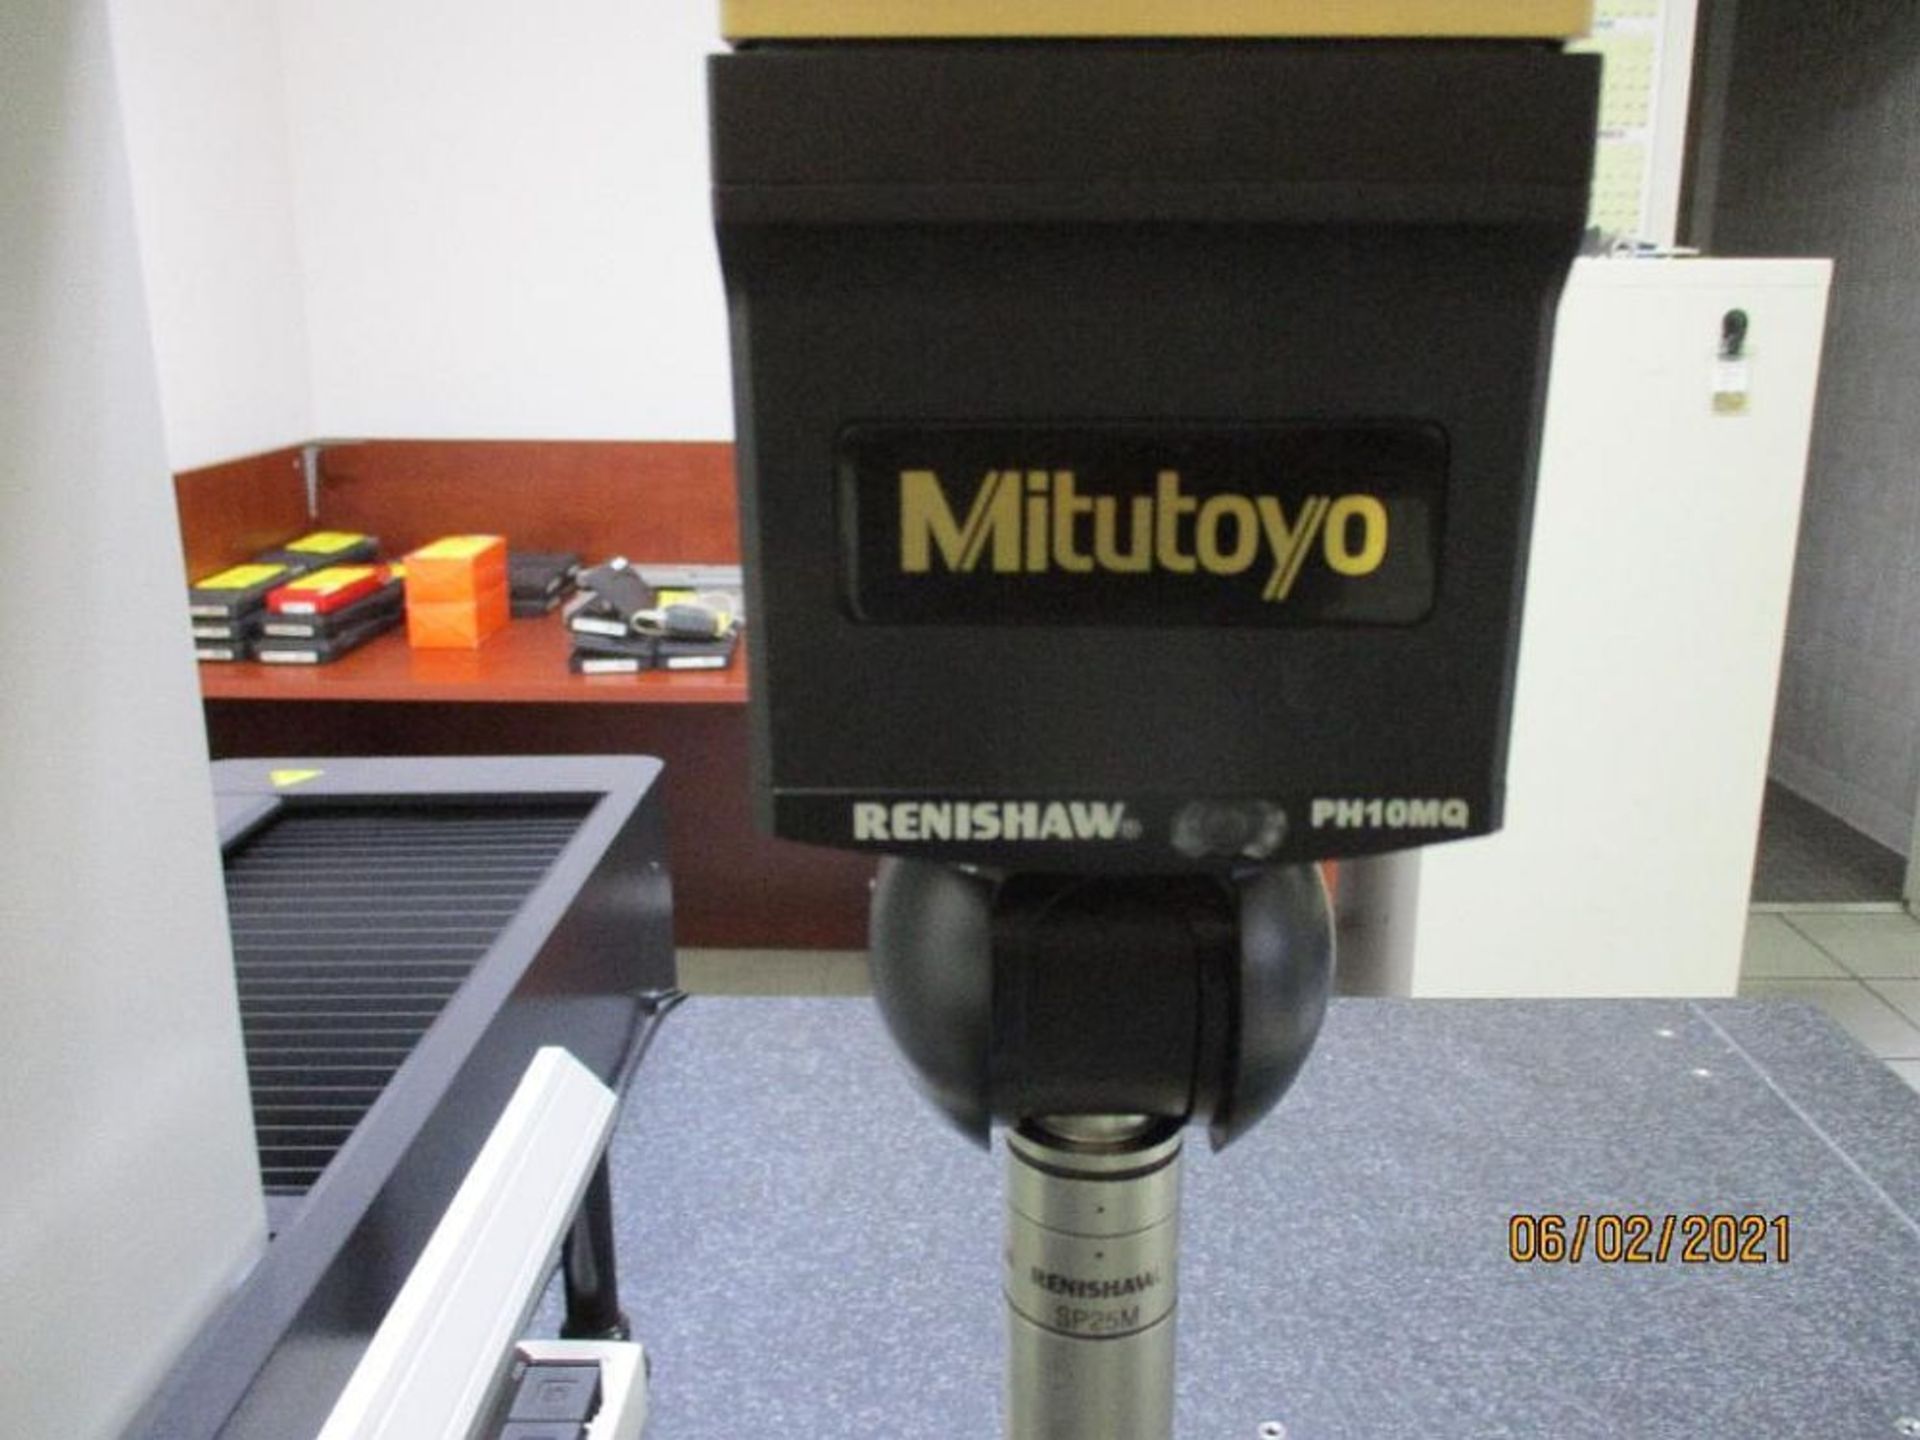 Mitutoyo Crysta Apex S 7106 DCC CMM, 27.3" x 39.4" x 23.4", MCosmos v4.1, PH-10MQ Probe, New 2015 - Image 3 of 5